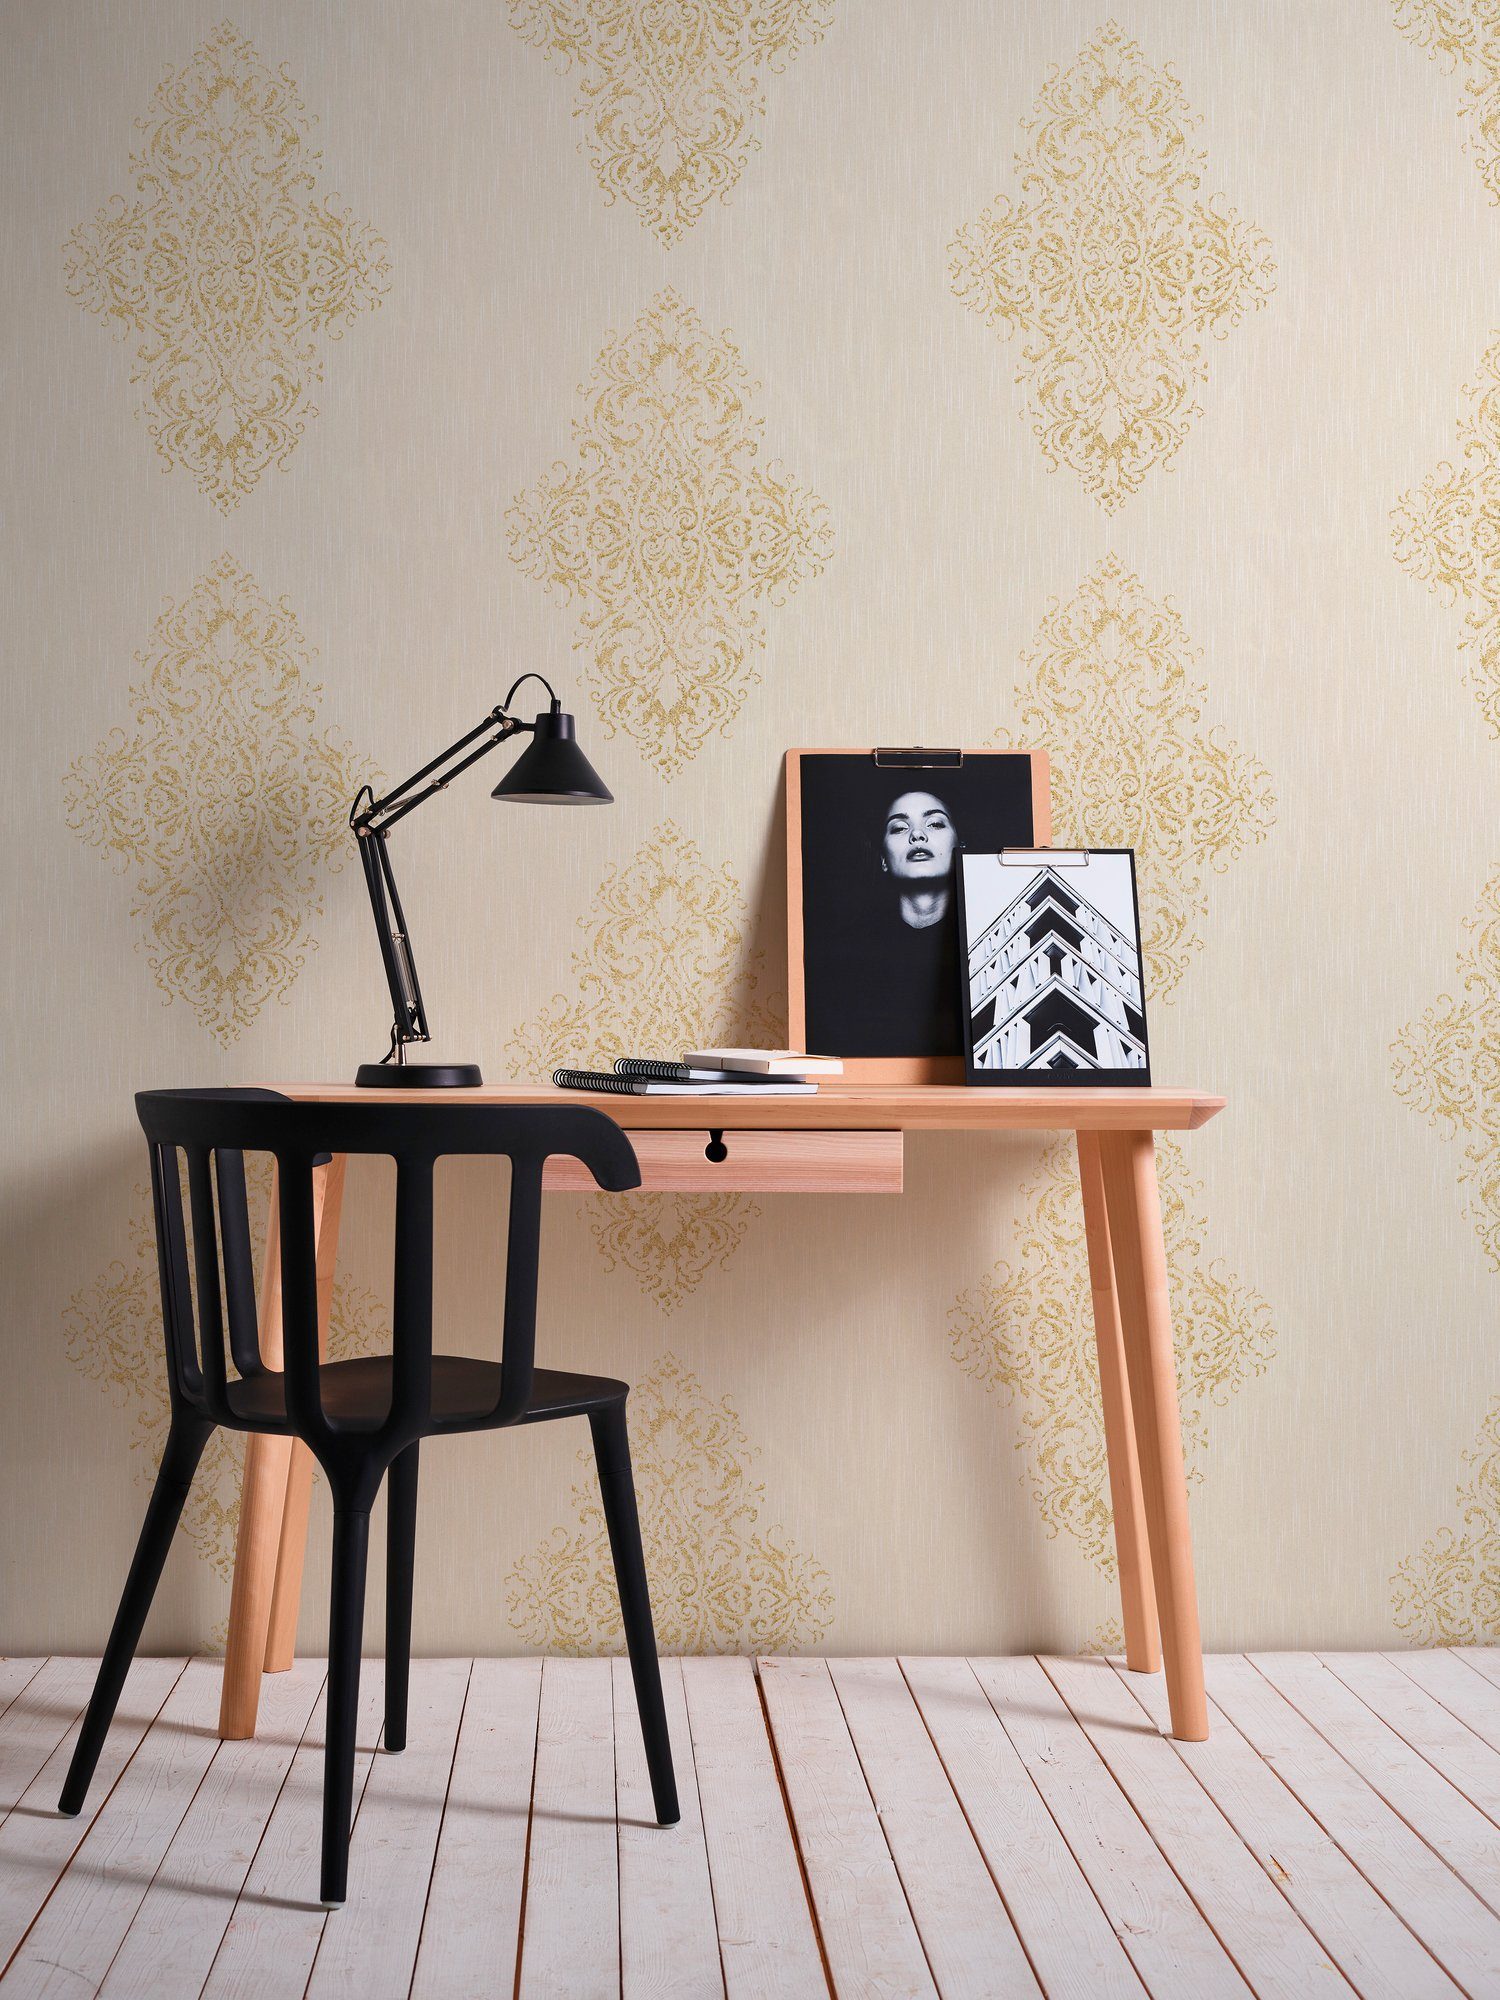 Barock, Luxury Architects Textiltapete Barock Metallic Tapete Effekt Textil Paper wallpaper, creme/gold samtig,